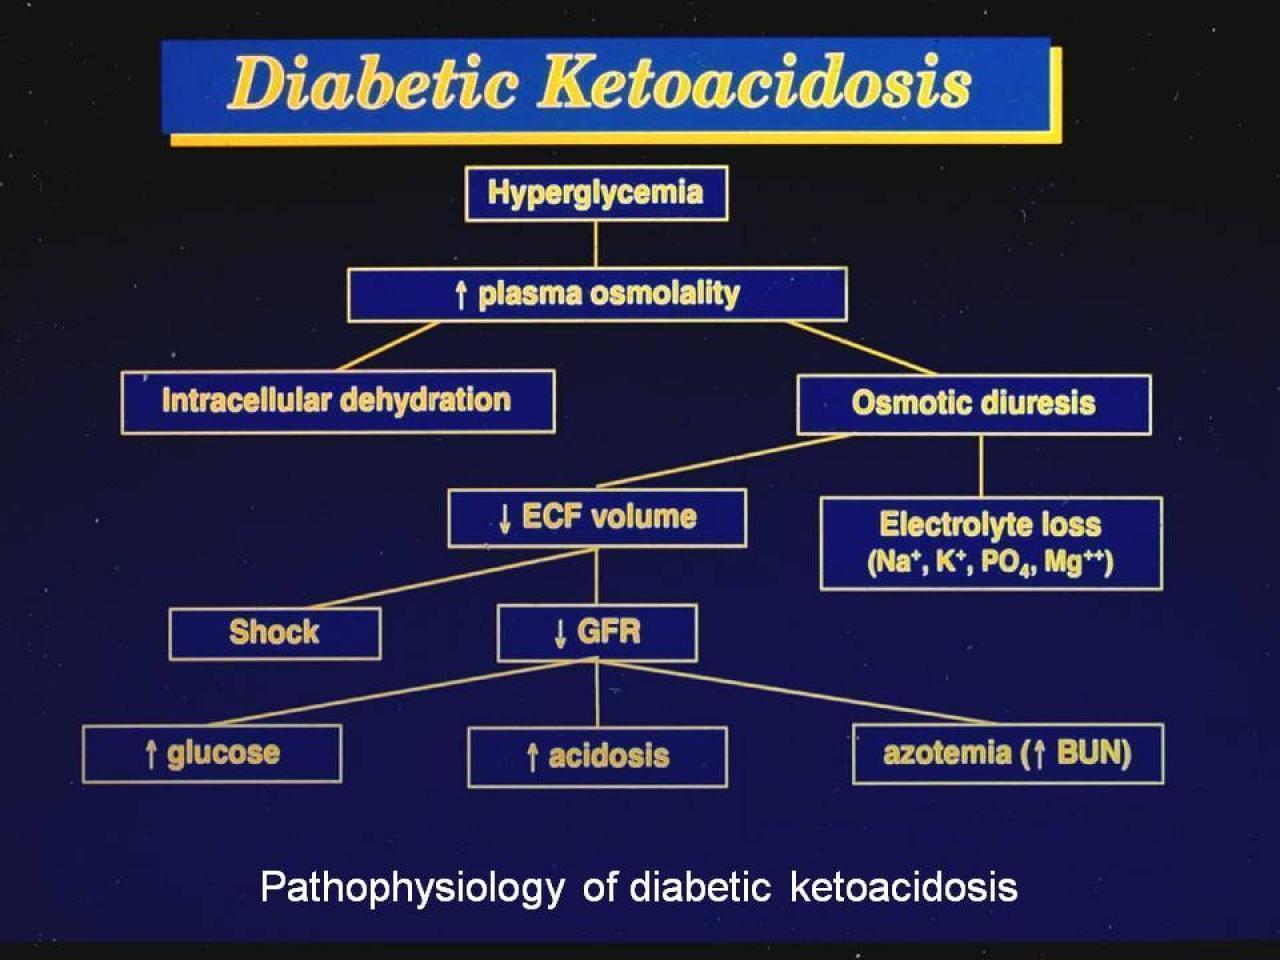 Management of Diabetic Ketoacidosis - Pathophysiology